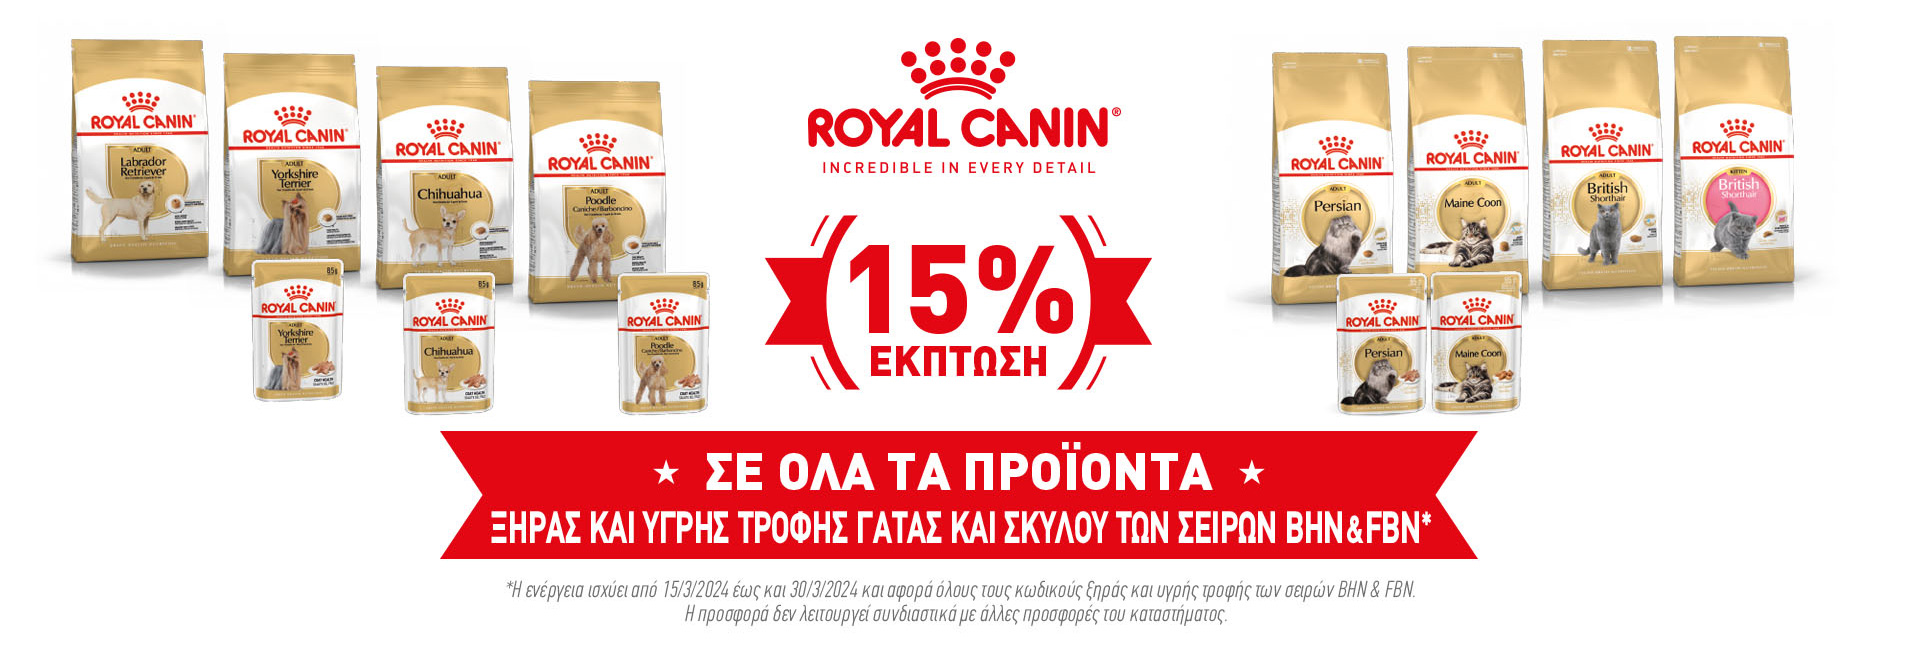 royal canin promo 15% σε ξηρά τροφή σκύλου just4pets